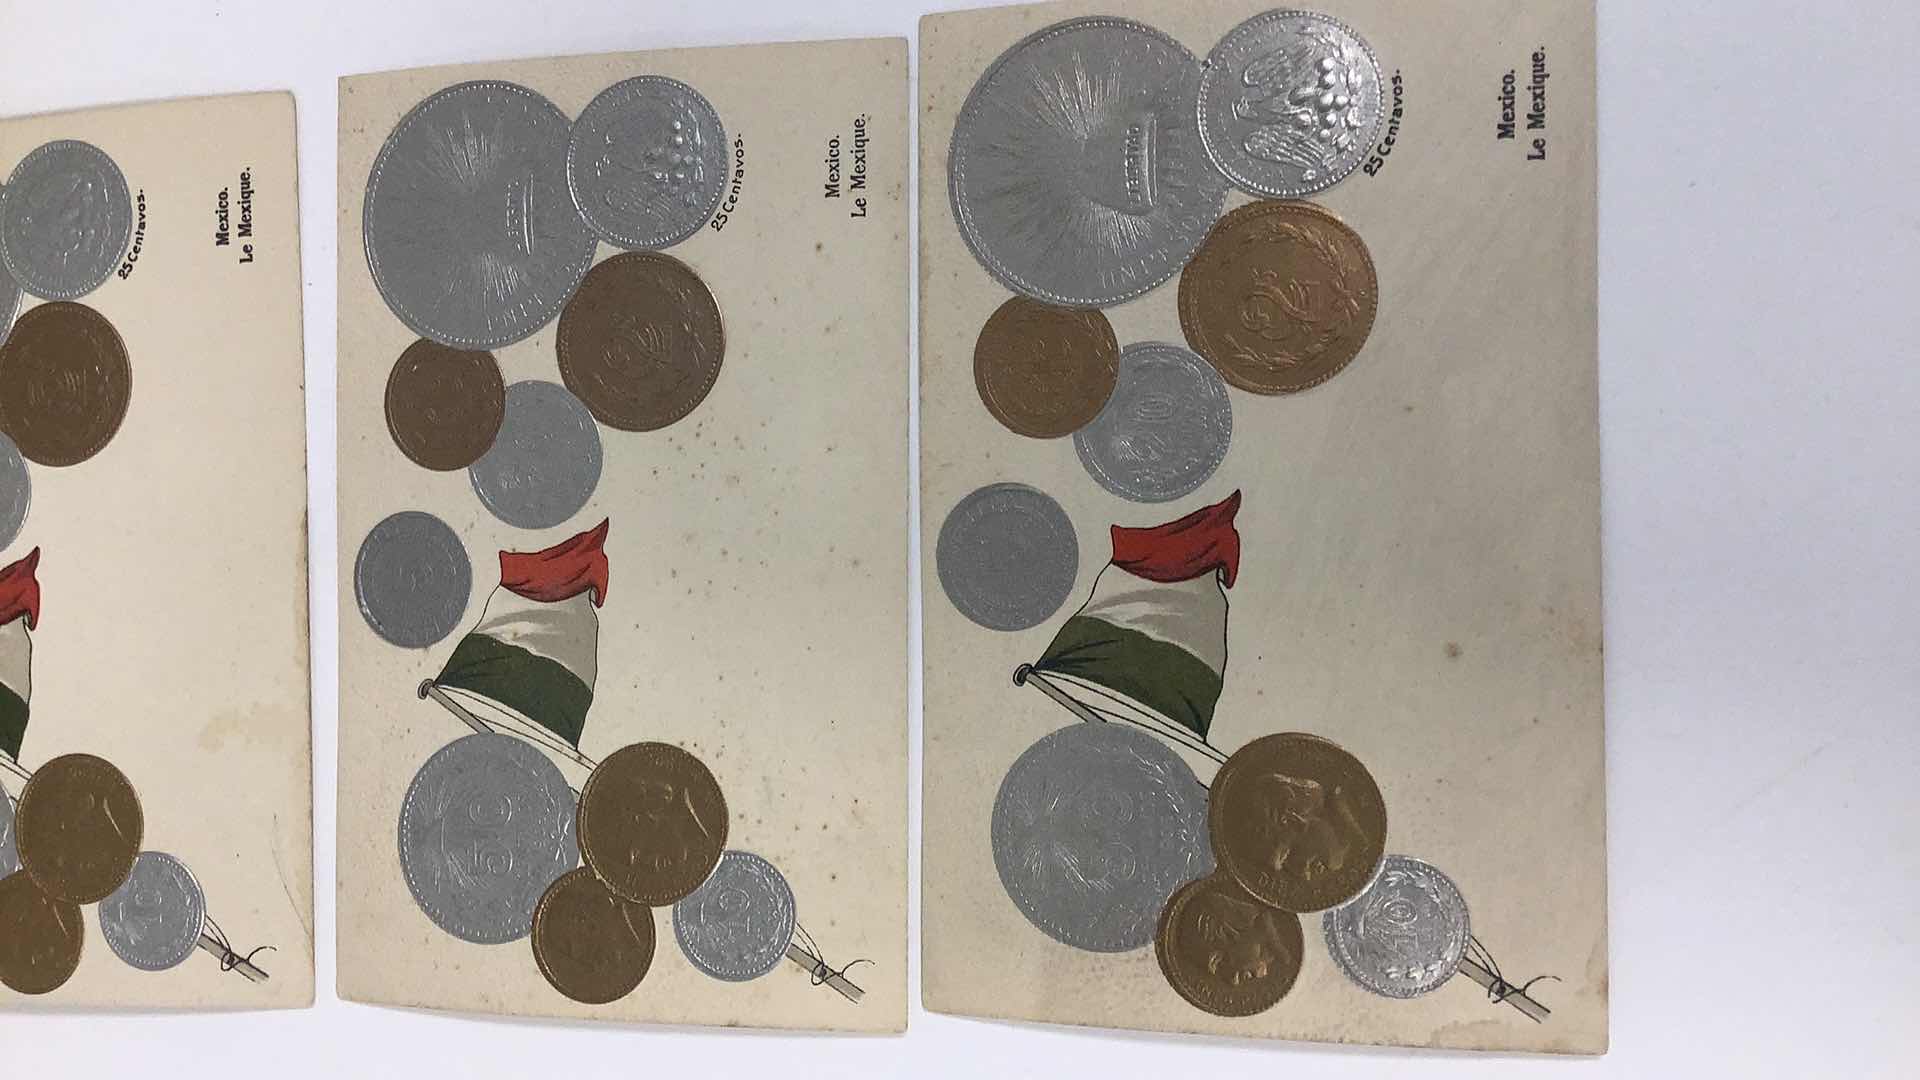 Photo 2 of 3 MEXICO COINS MONEZ VINTAGE POST CARDS